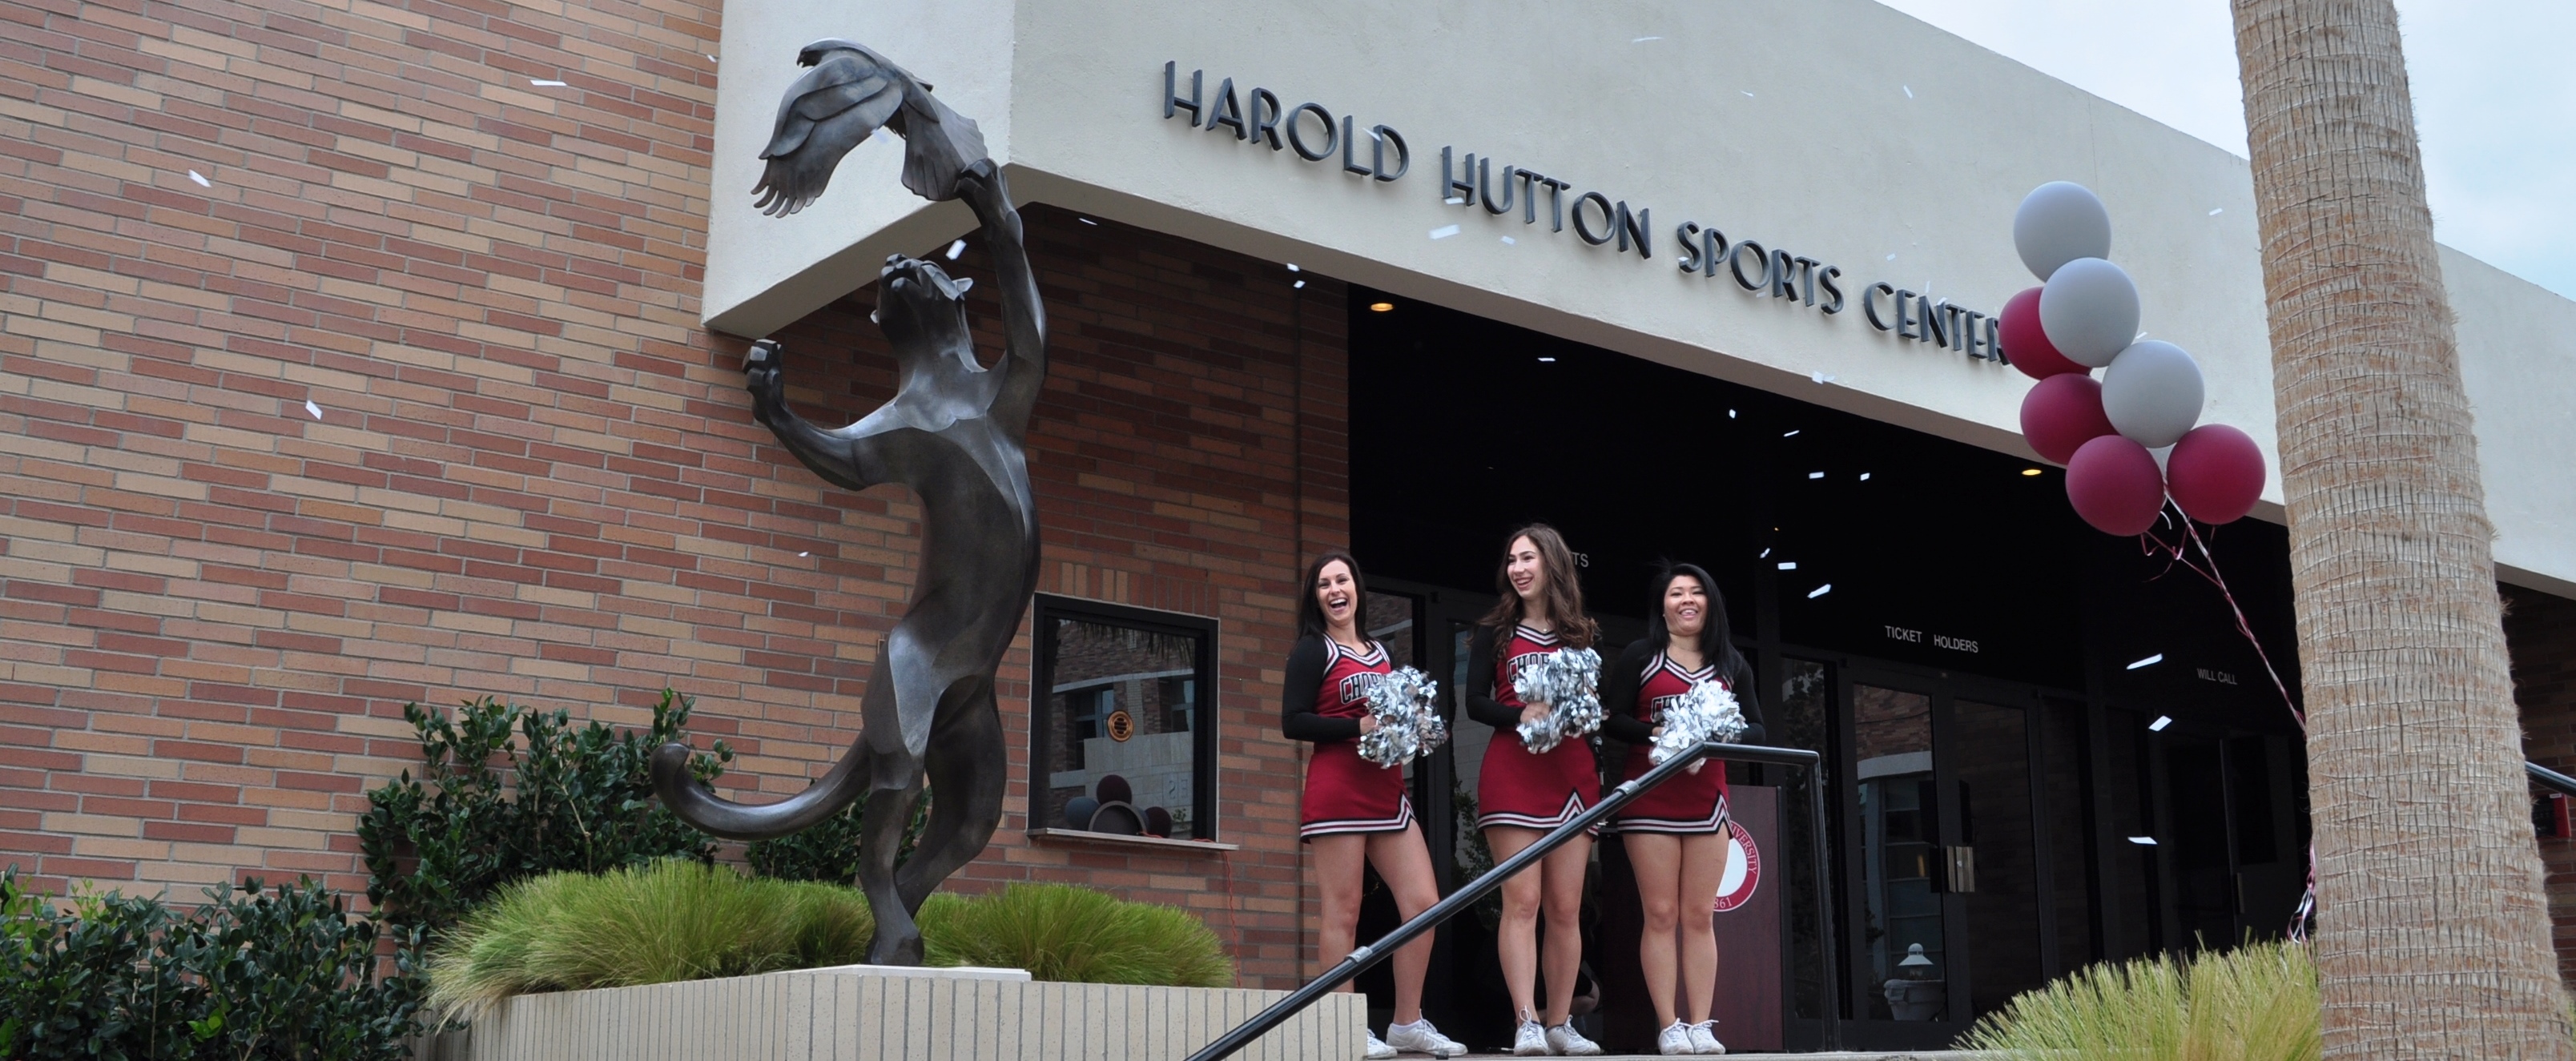 cheerleaders standing by new statue